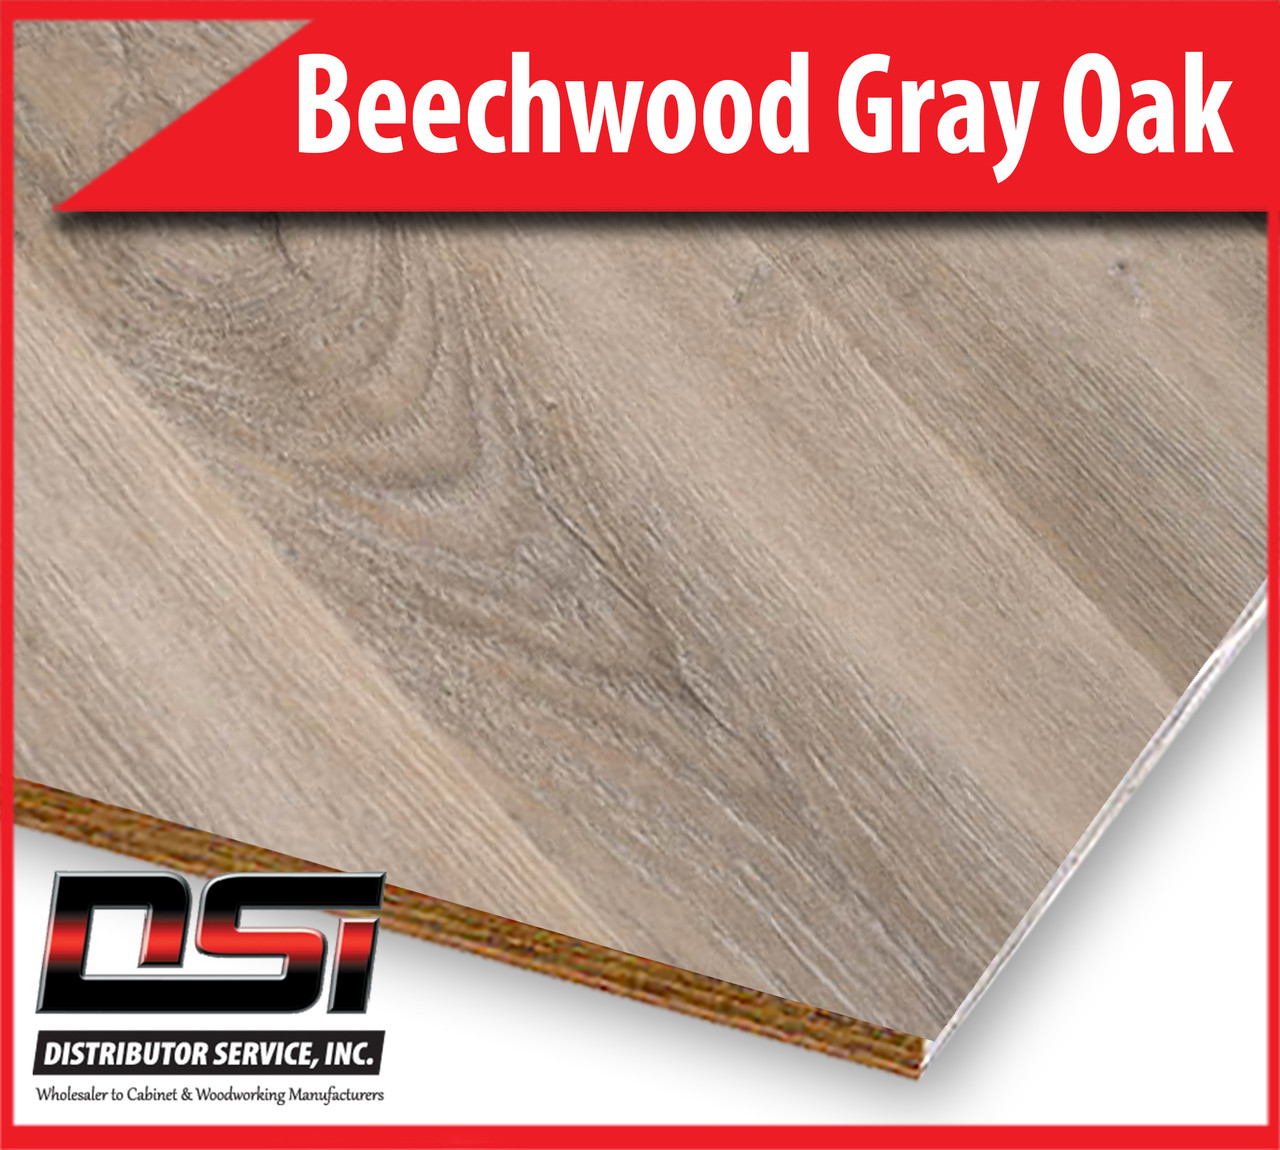 Beechwood Gray Oak Plywood Qtr Eurocore A-A 3/4" x 4x8